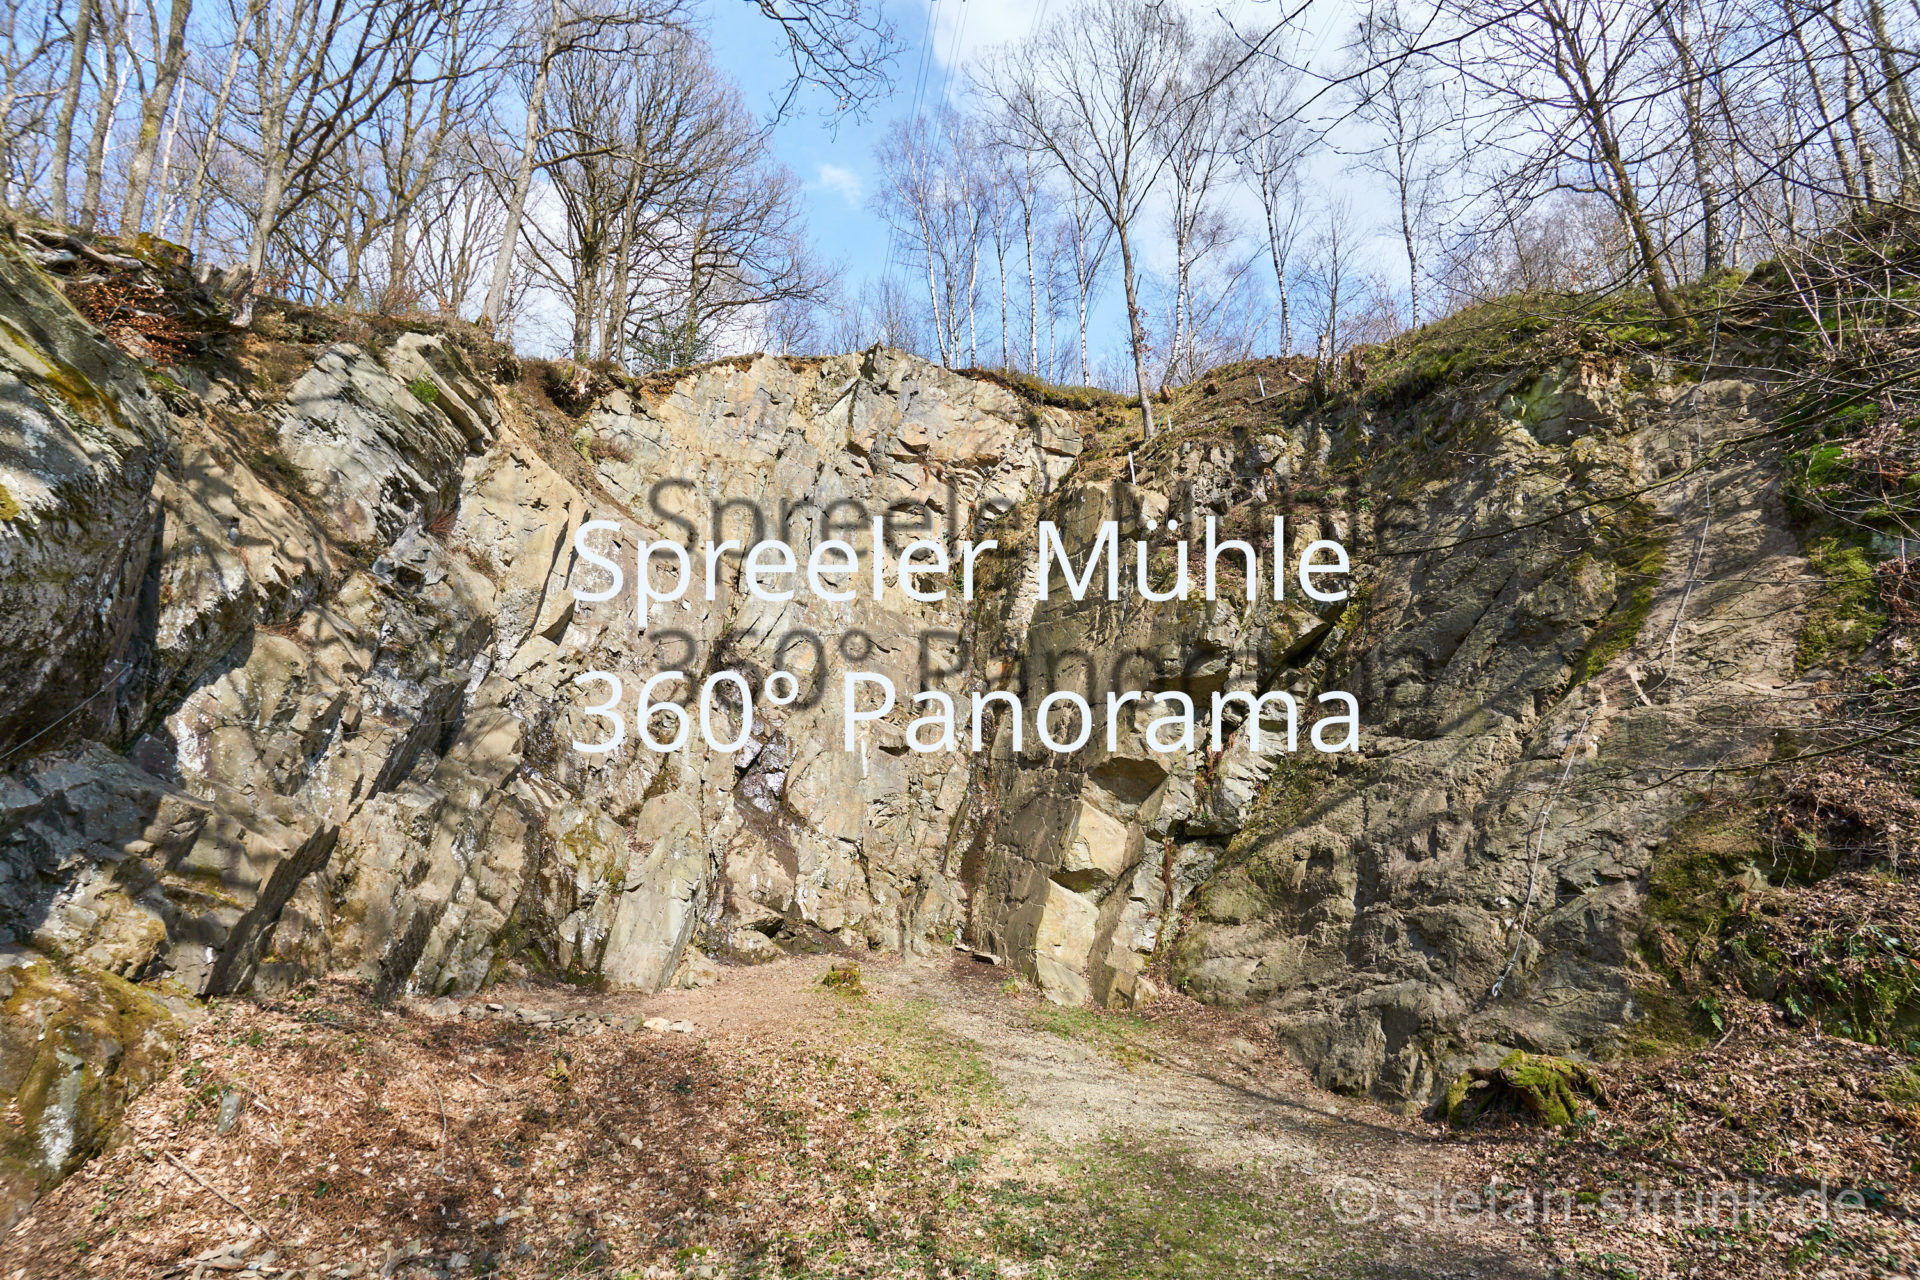 Stefan Strunk - Klettergarten Spreeler Mühle 360° Panorama